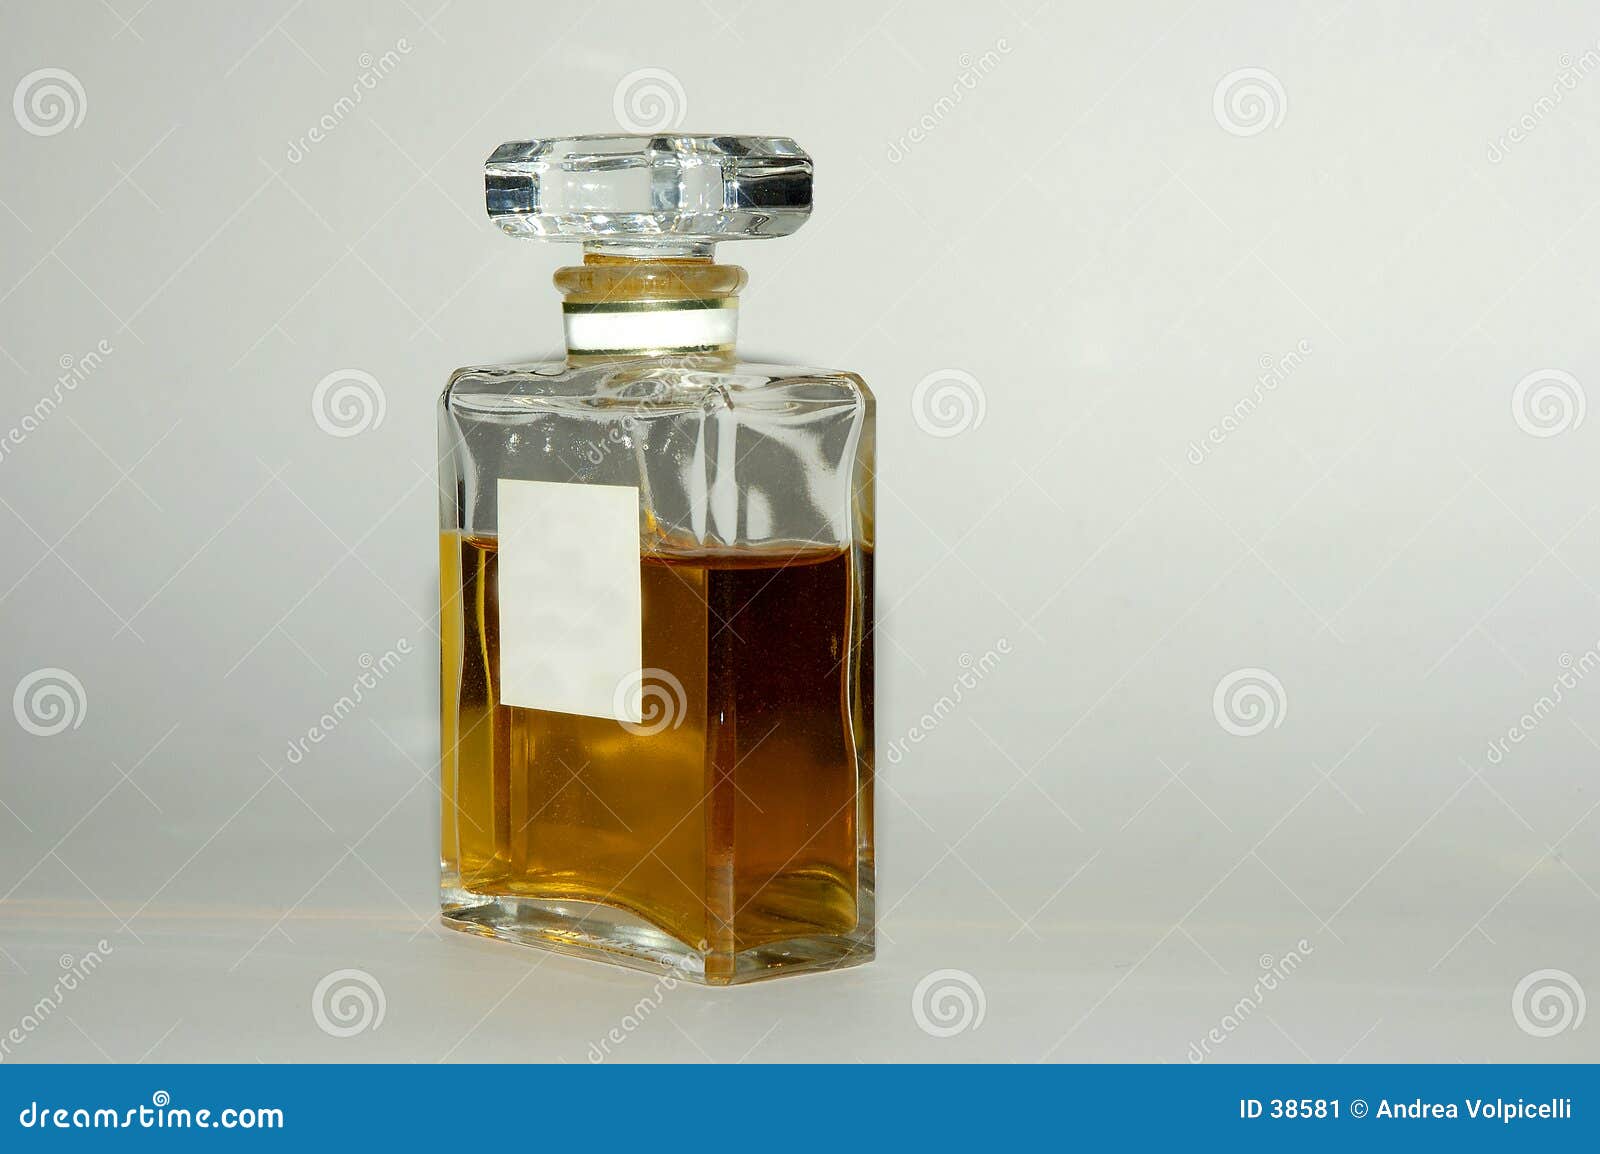 675 Chanel Fragrance Stock Photos - Free & Royalty-Free Stock